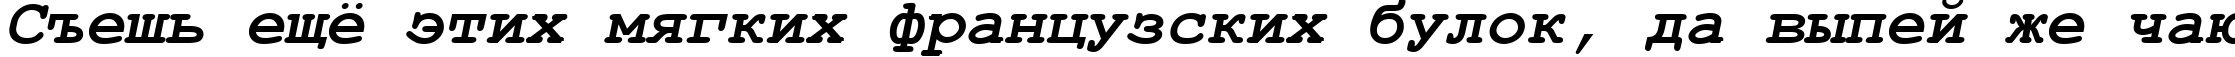 Пример написания шрифтом Courier New Bold Italic текста на русском